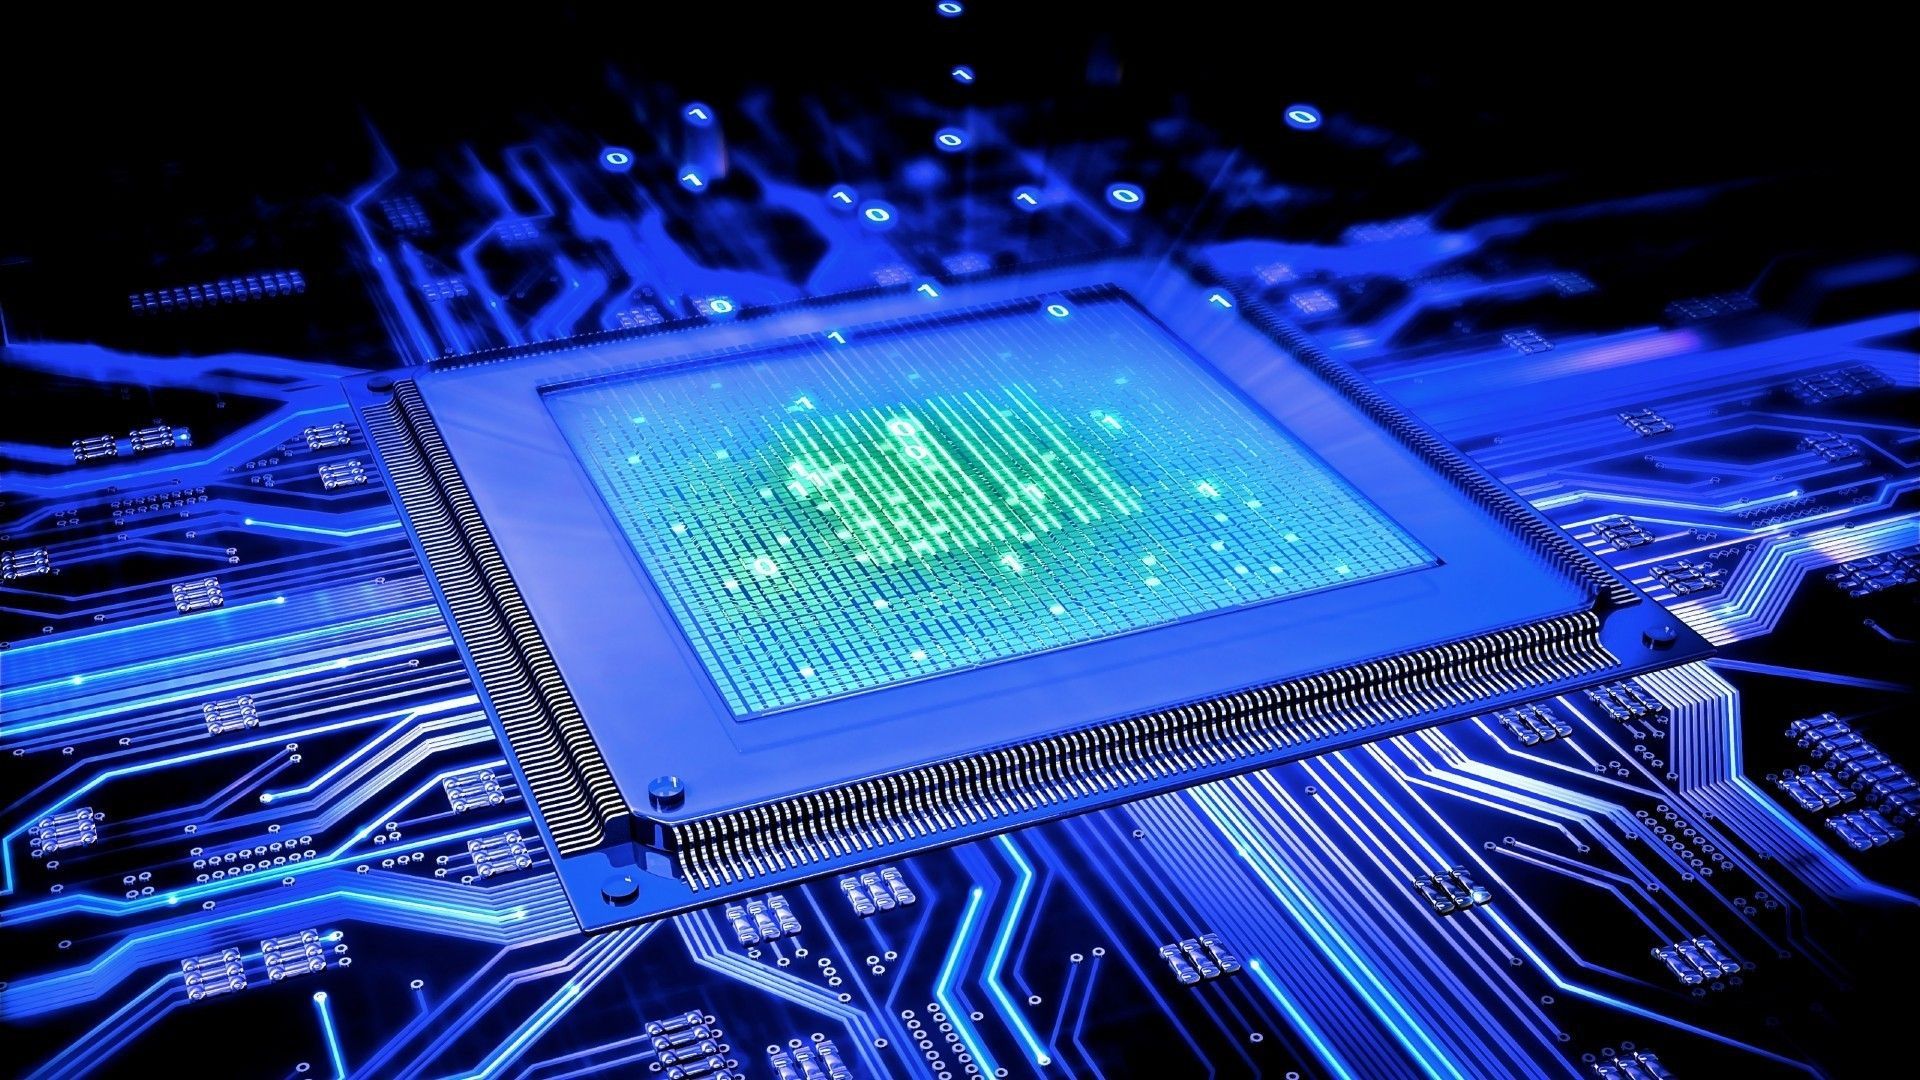 Motherboard Blue Circuits Circuit Board computer wallpaper background. Wallpaper komputer, Teknologi komputer, Sains komputer